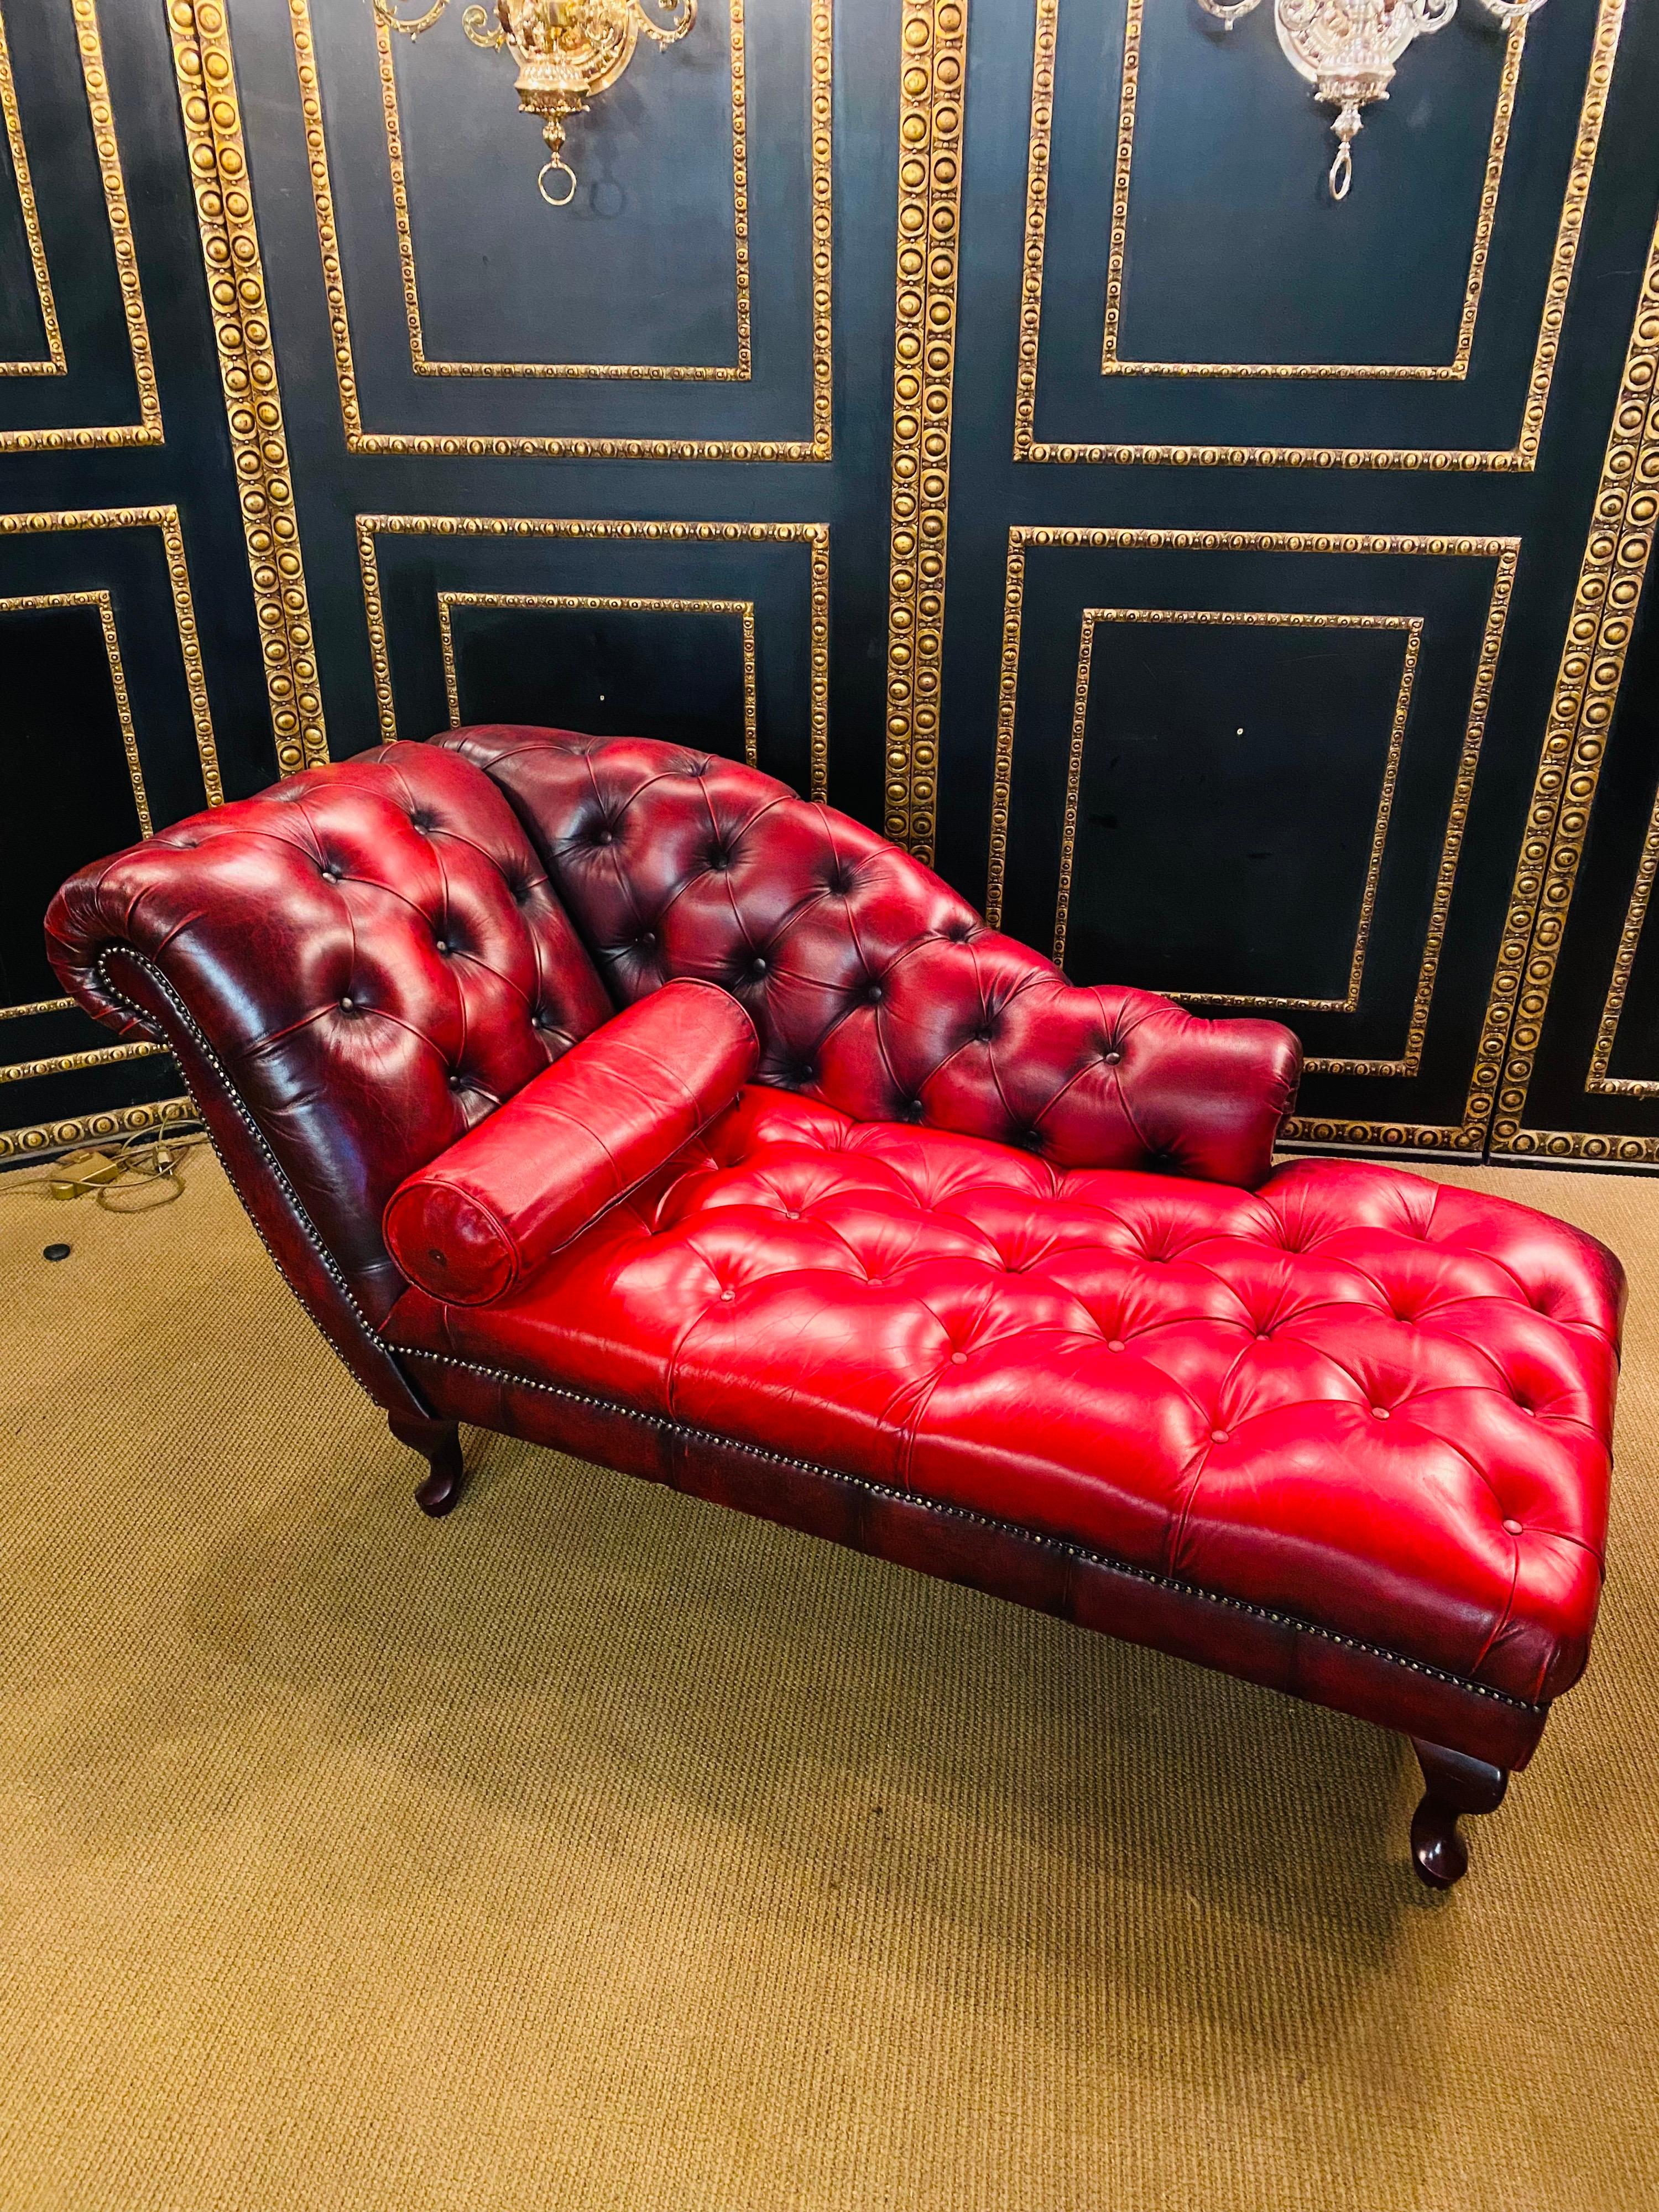 Schönes original vintage Chesterfield Rotes Leder Chaise Lounge Daybed Sofa im Angebot 15